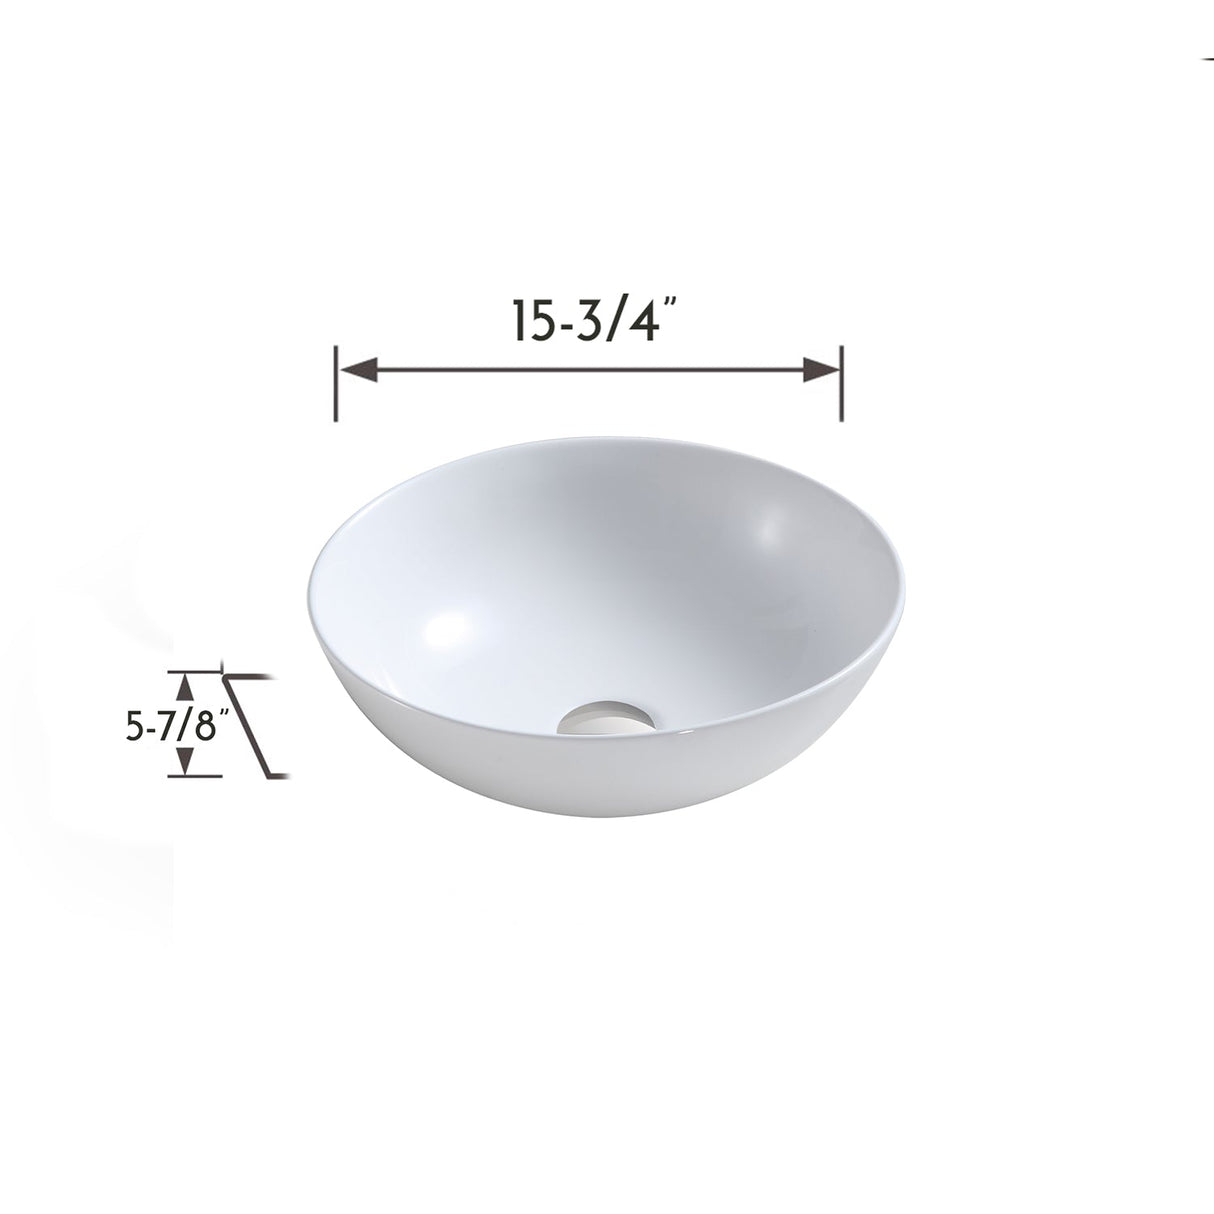 DAX Ceramic Round Bathroom Vessel Basin, 16", White Glossy DAX-CL1344-WG